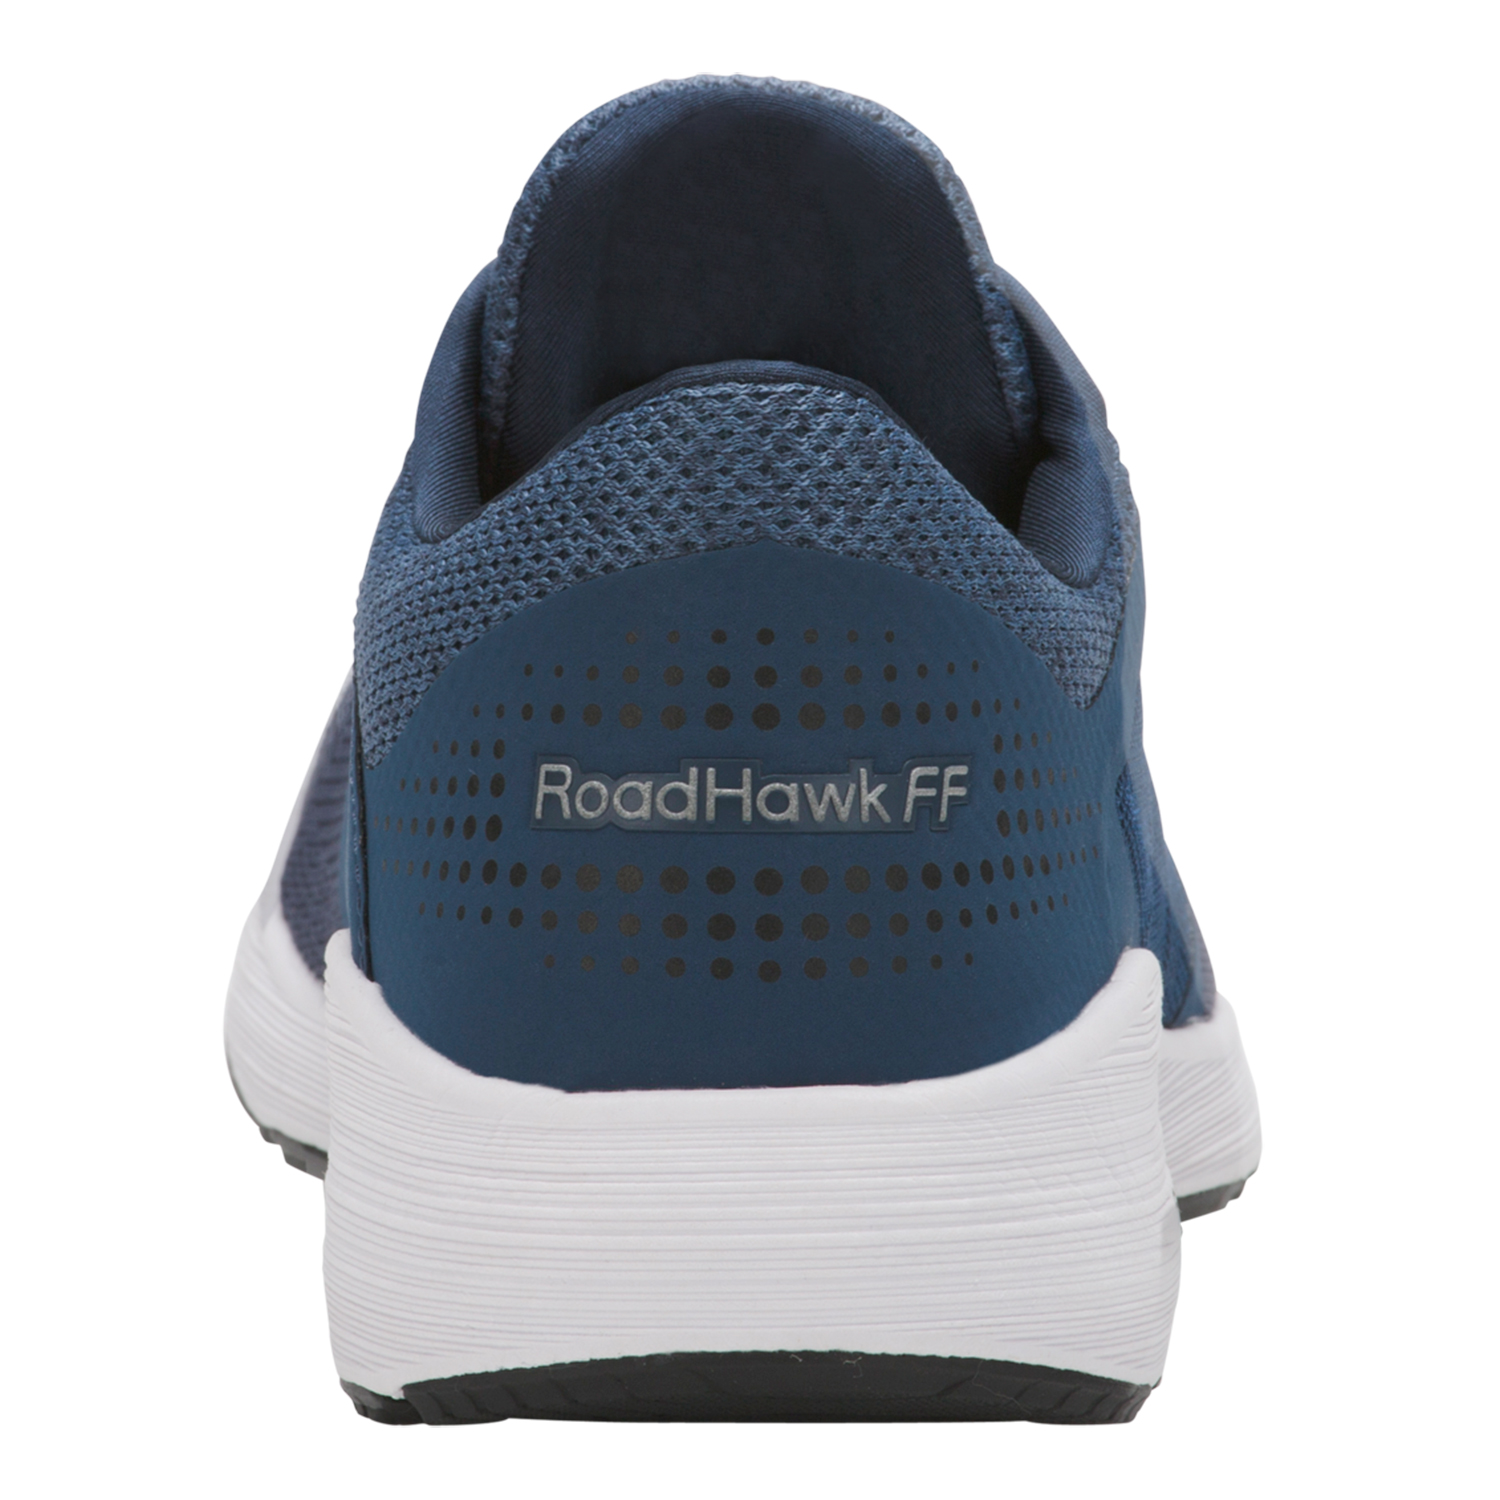 asics men's roadhawk ff running shoes t7d2n